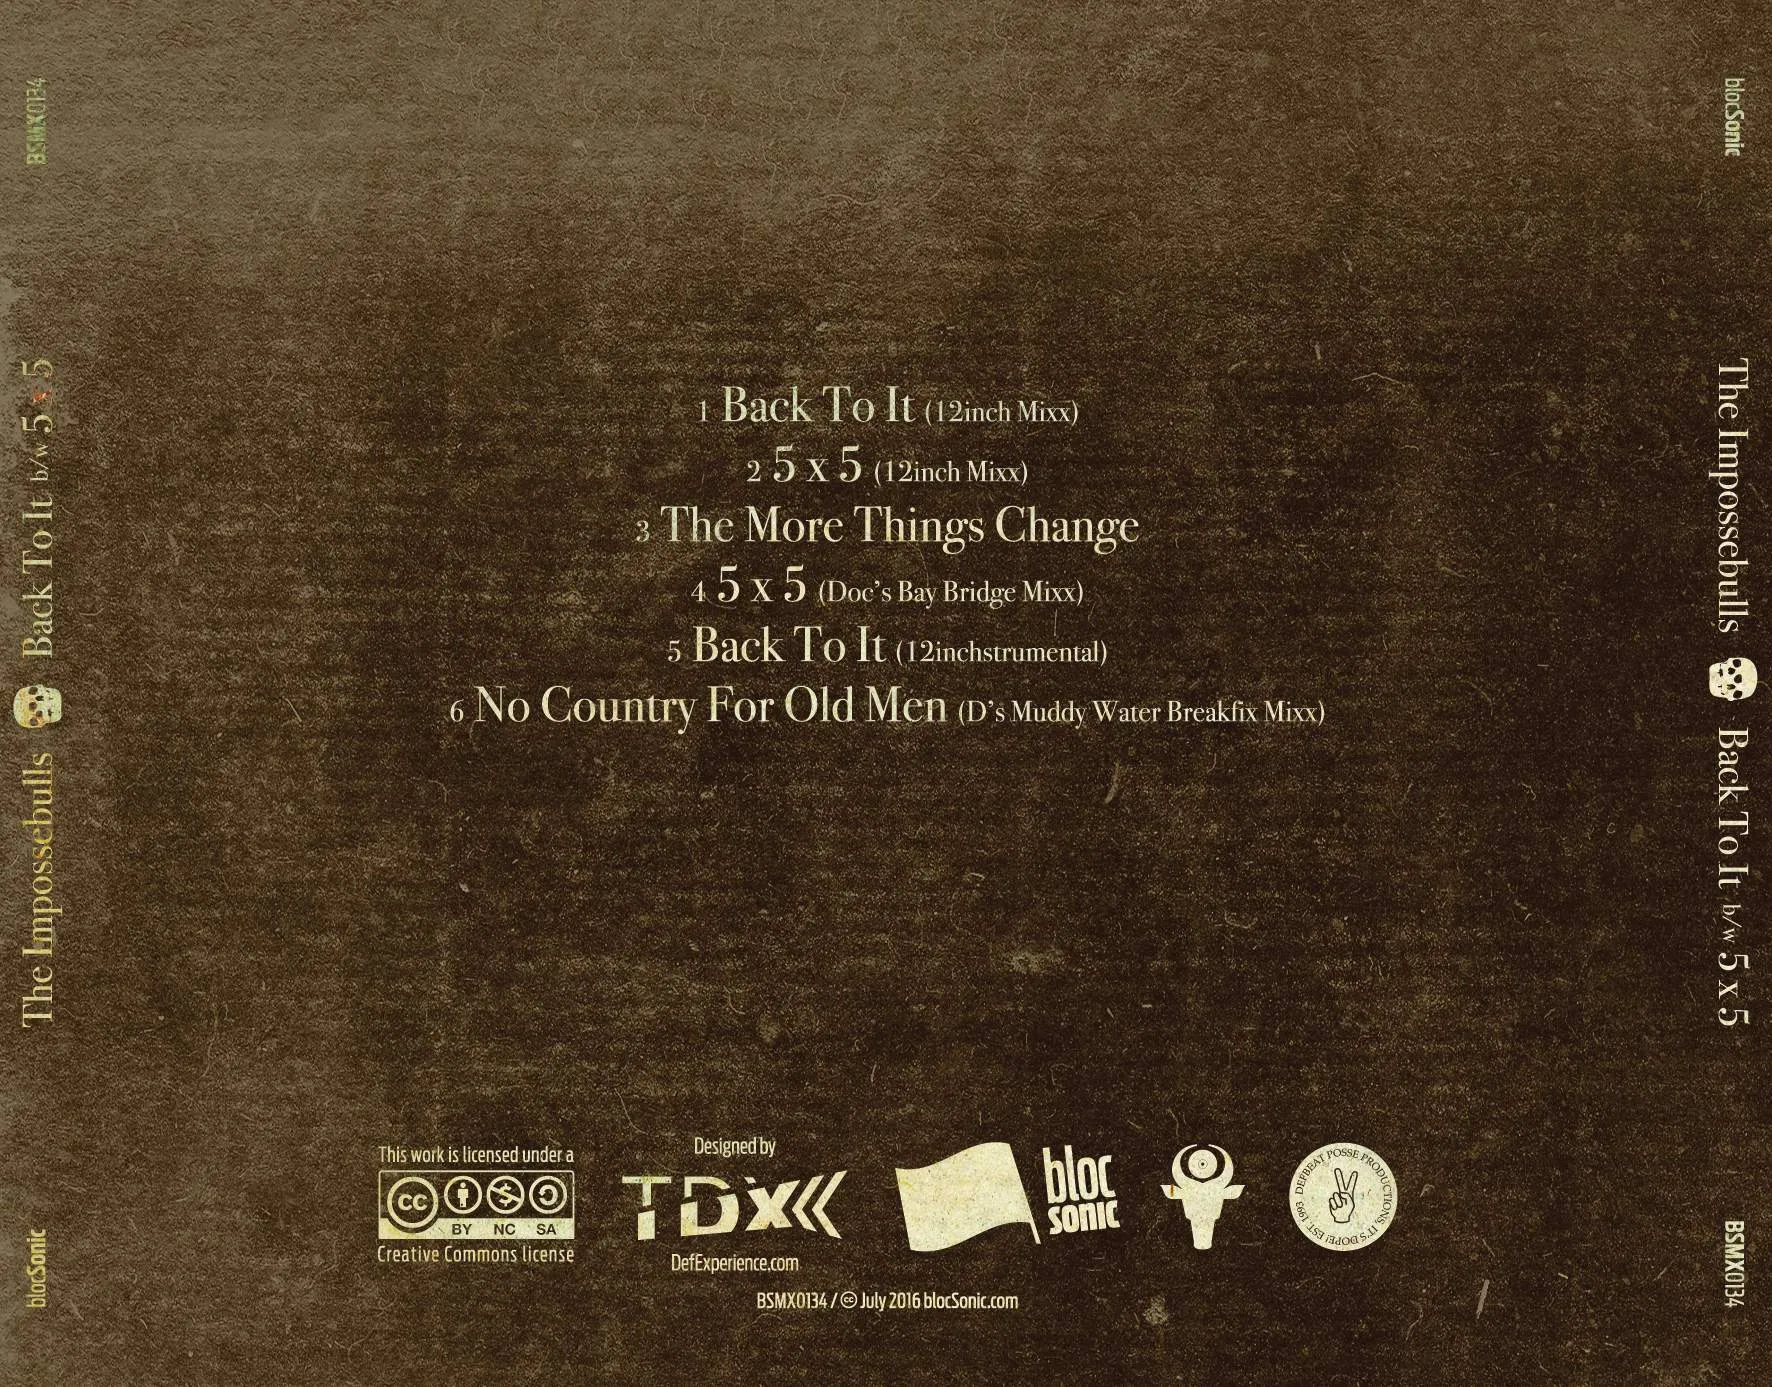 Album traycard for “Back To It b/w 5 x 5” by The Impossebulls